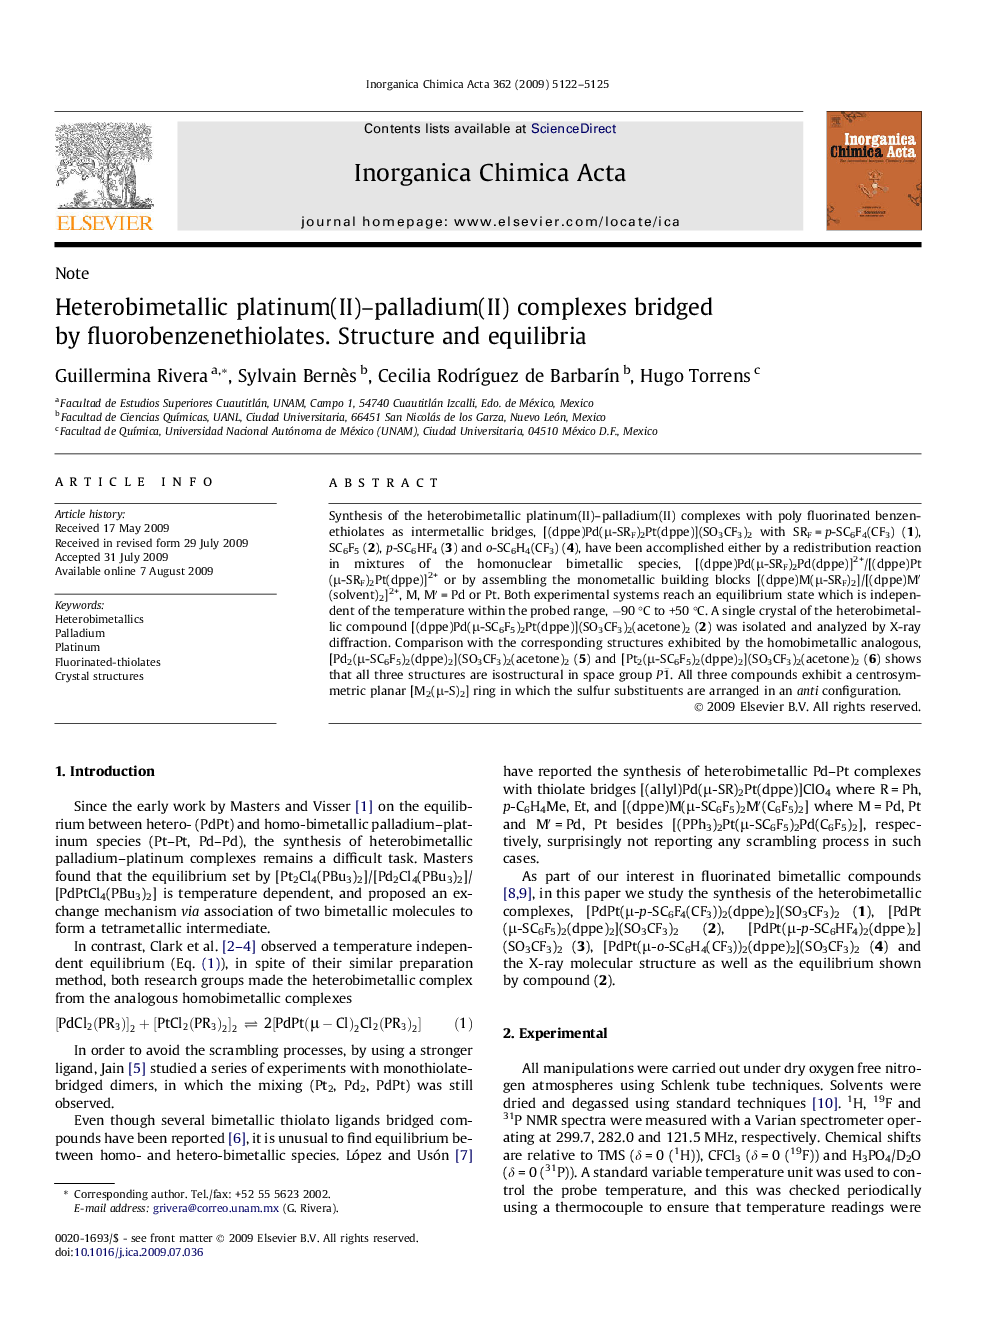 Heterobimetallic platinum(II)–palladium(II) complexes bridged by fluorobenzenethiolates. Structure and equilibria